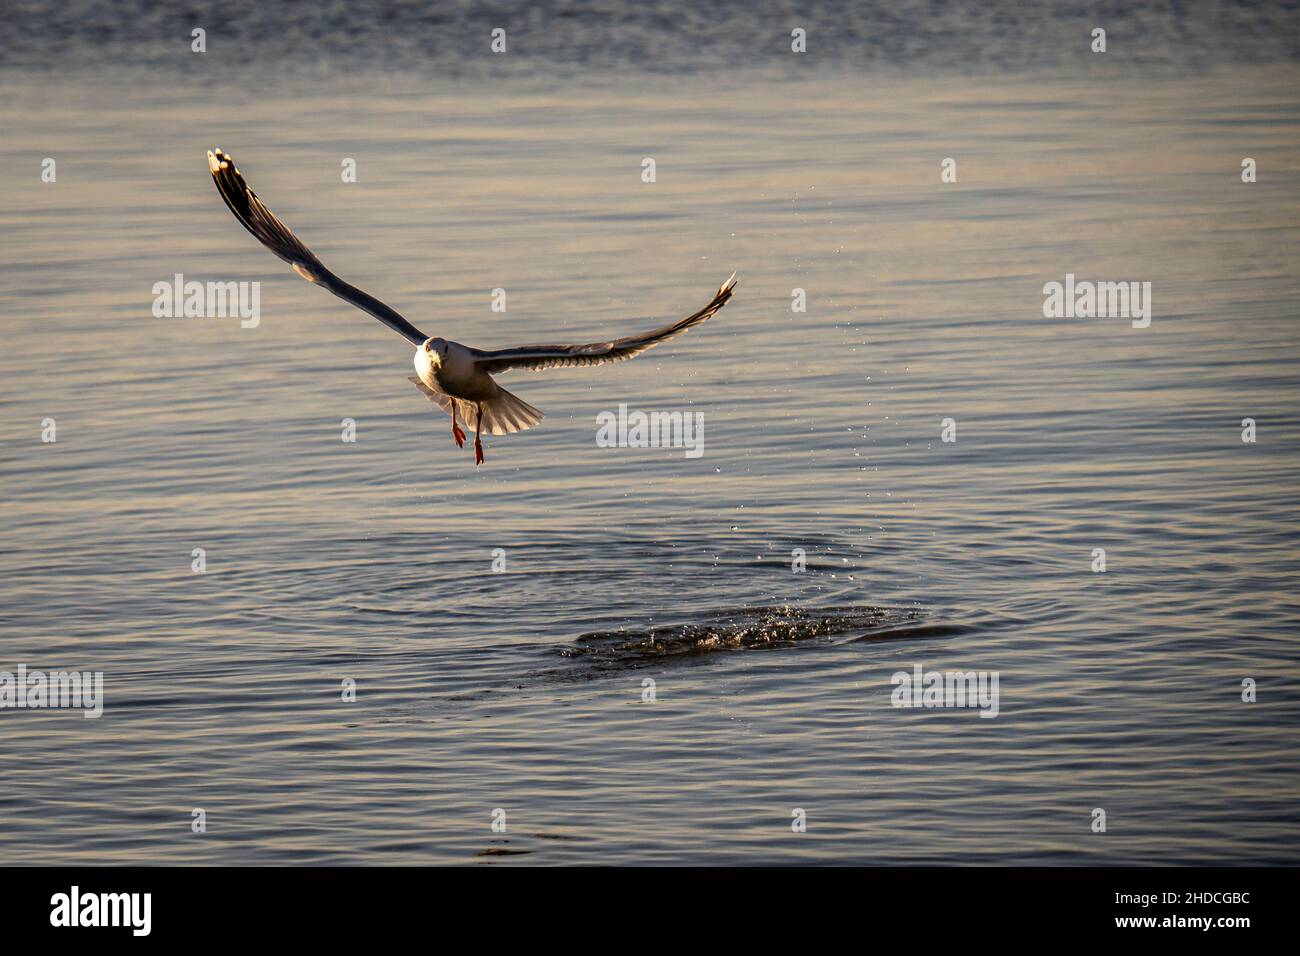 Beautiful aquatic bird flying over water Stock Photo